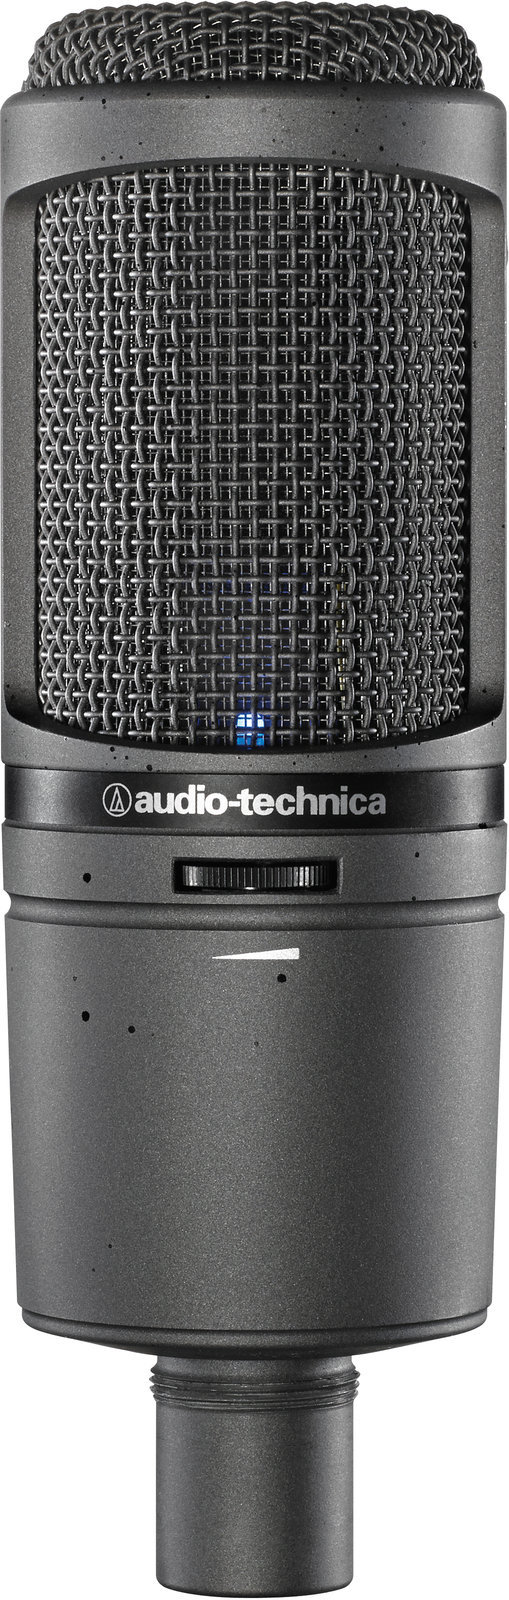 USB Microphone Audio-Technica AT2020USBi